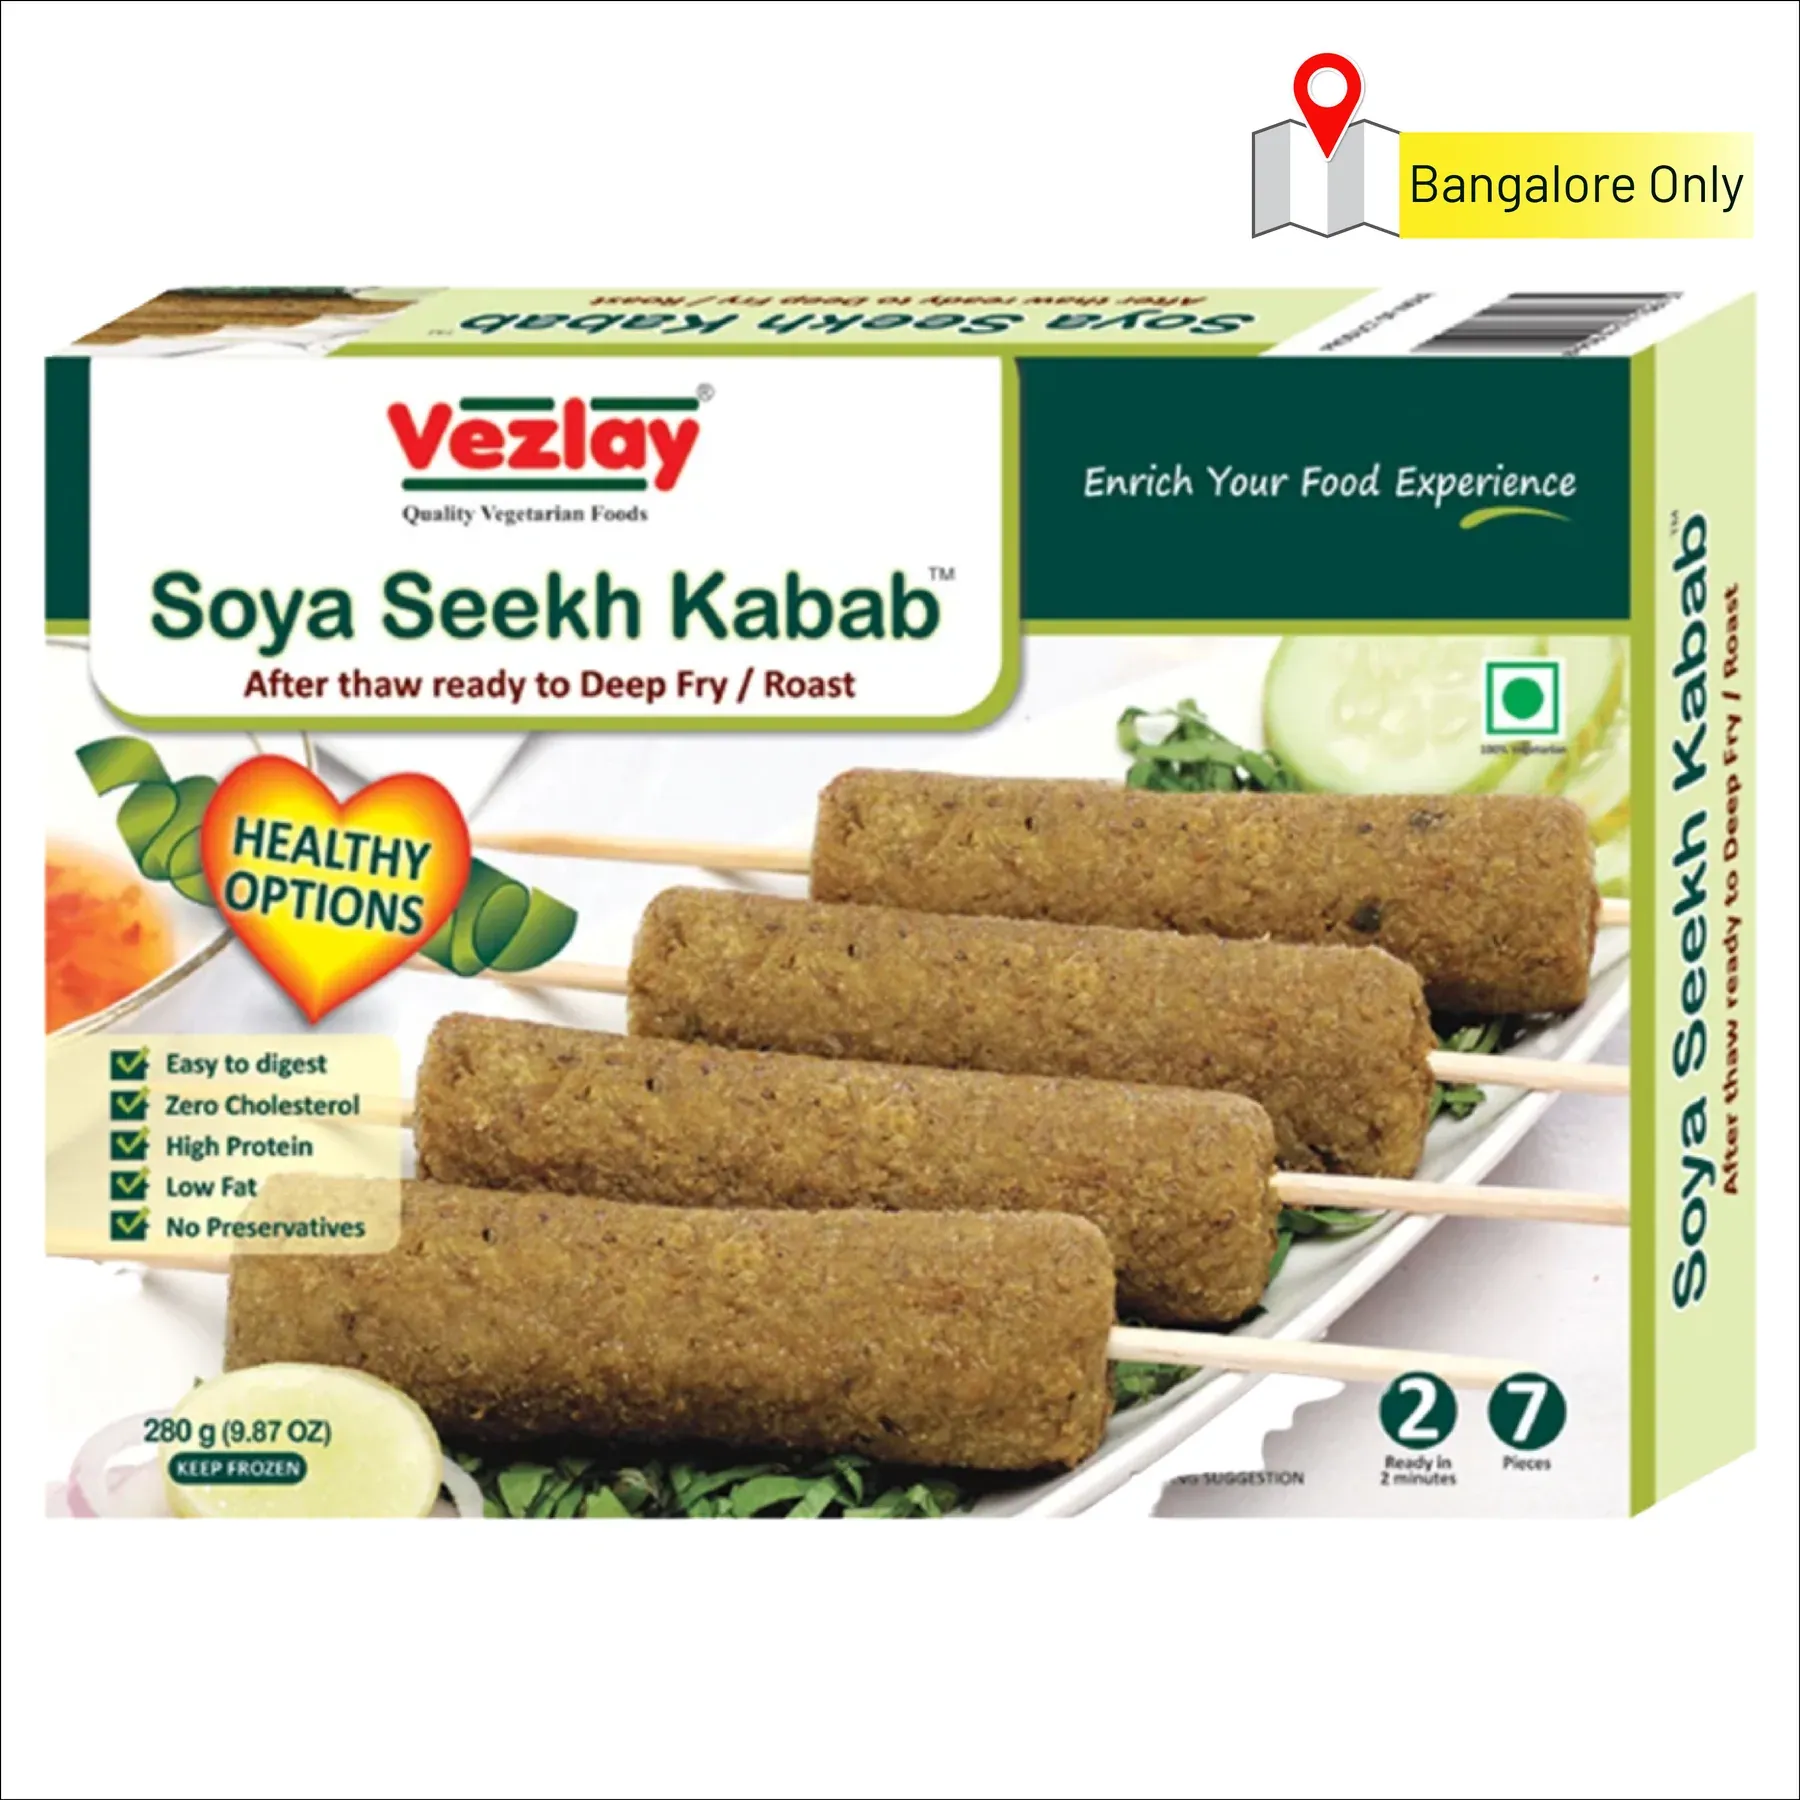 Vezlay Soya Seekh Kabab Image